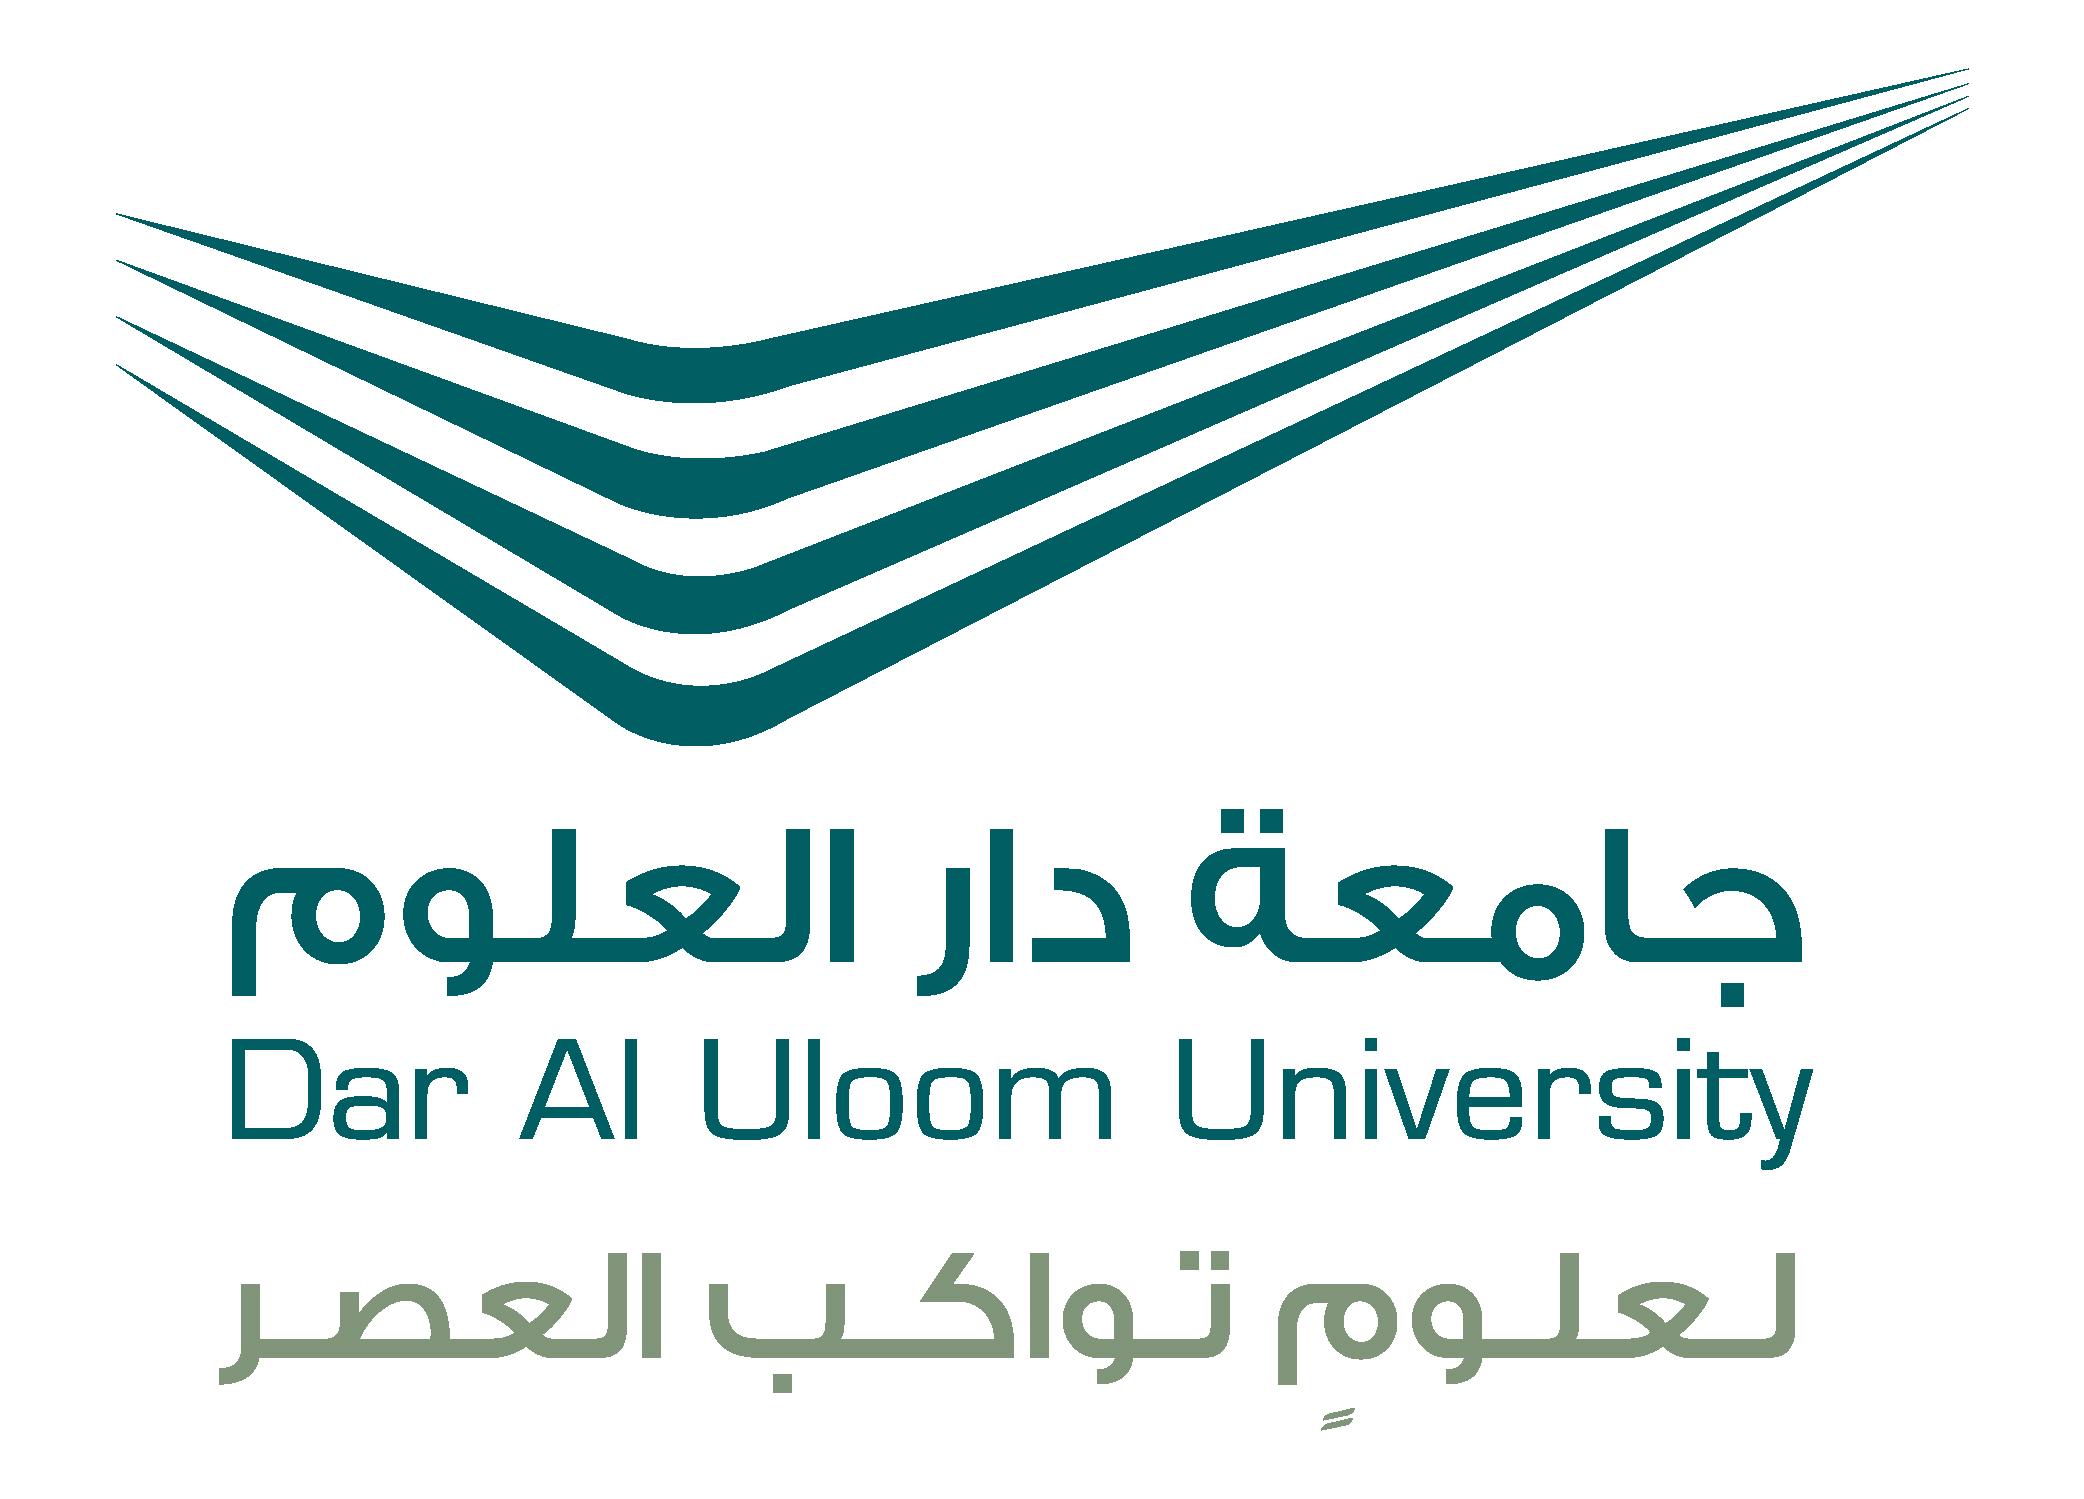 Dar Al Uloom University